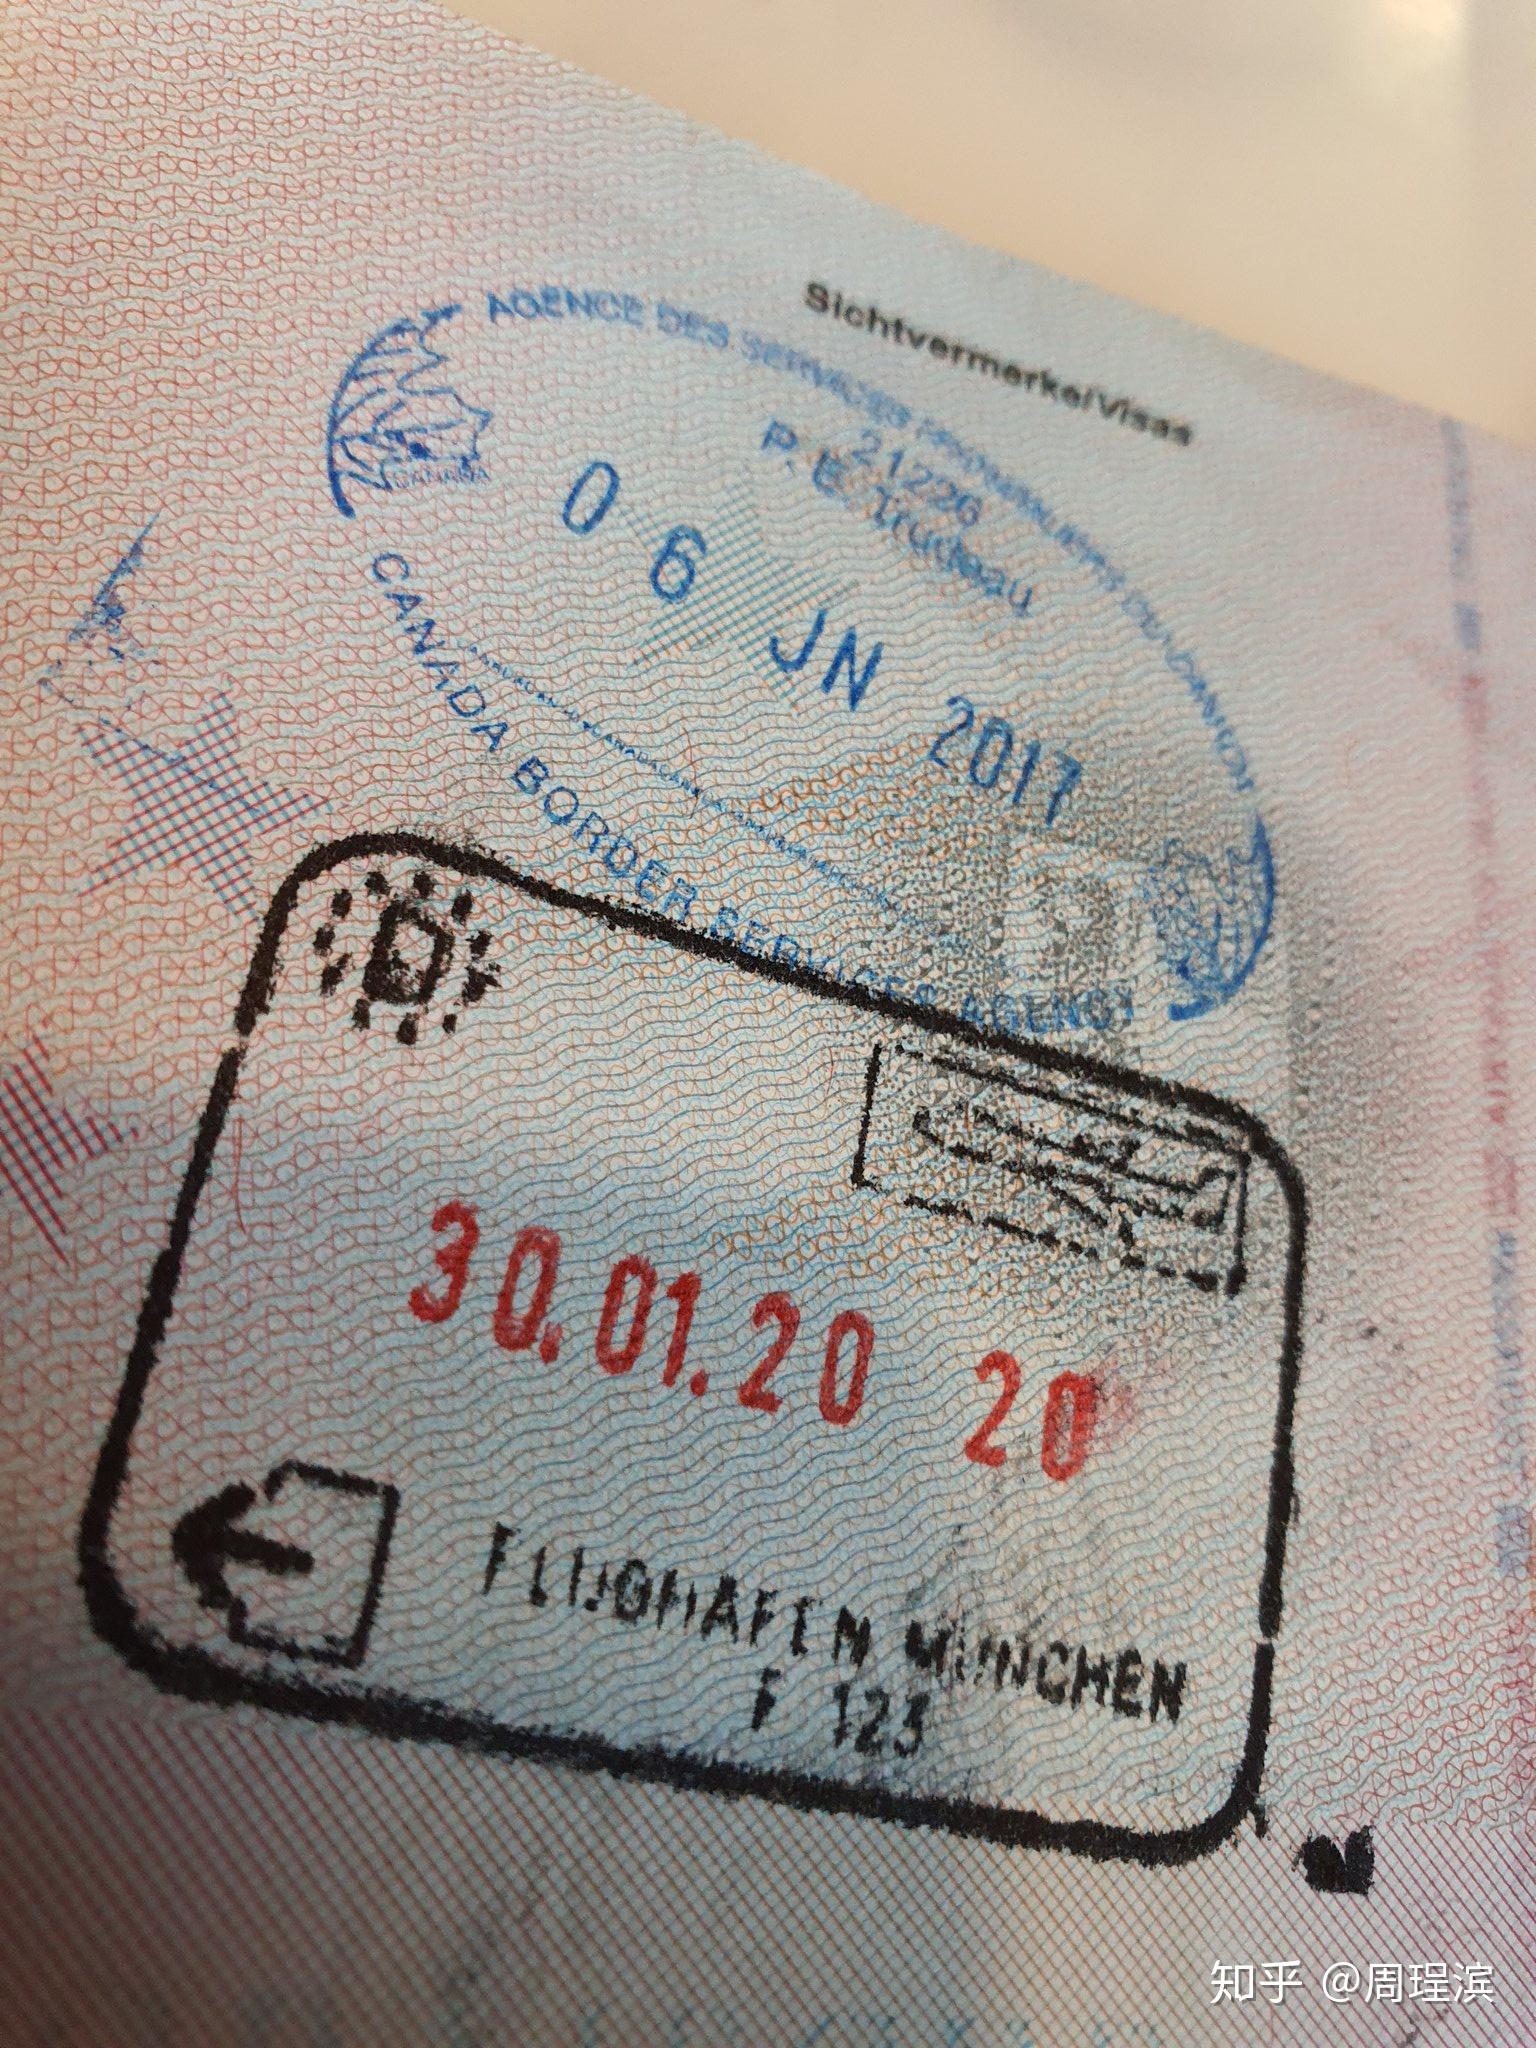 passportcanada图片